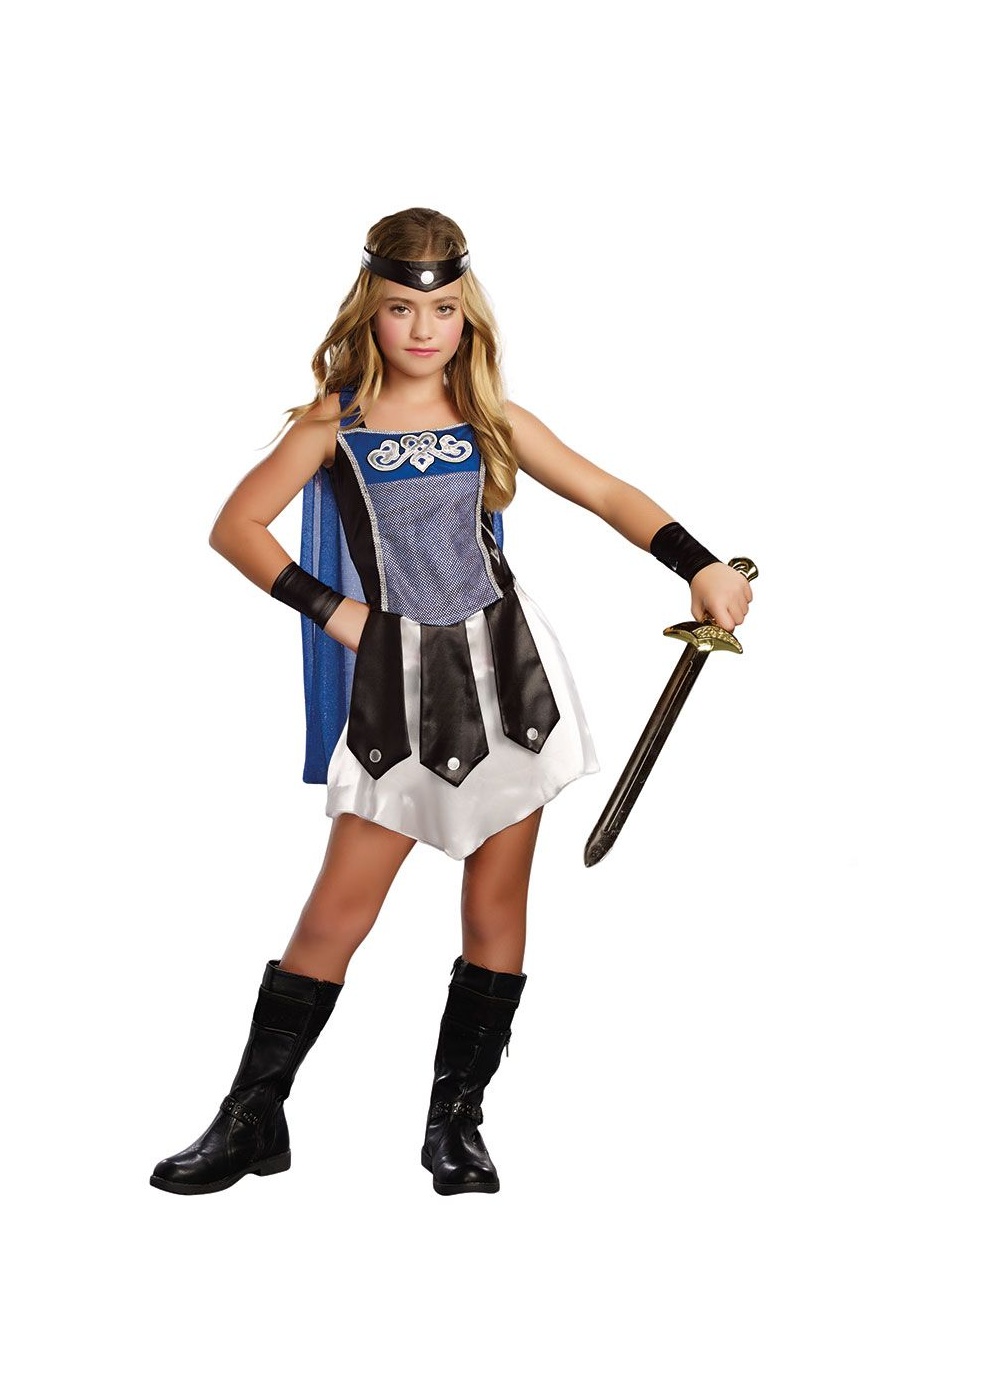  Girls Gladiator Warrior Costume